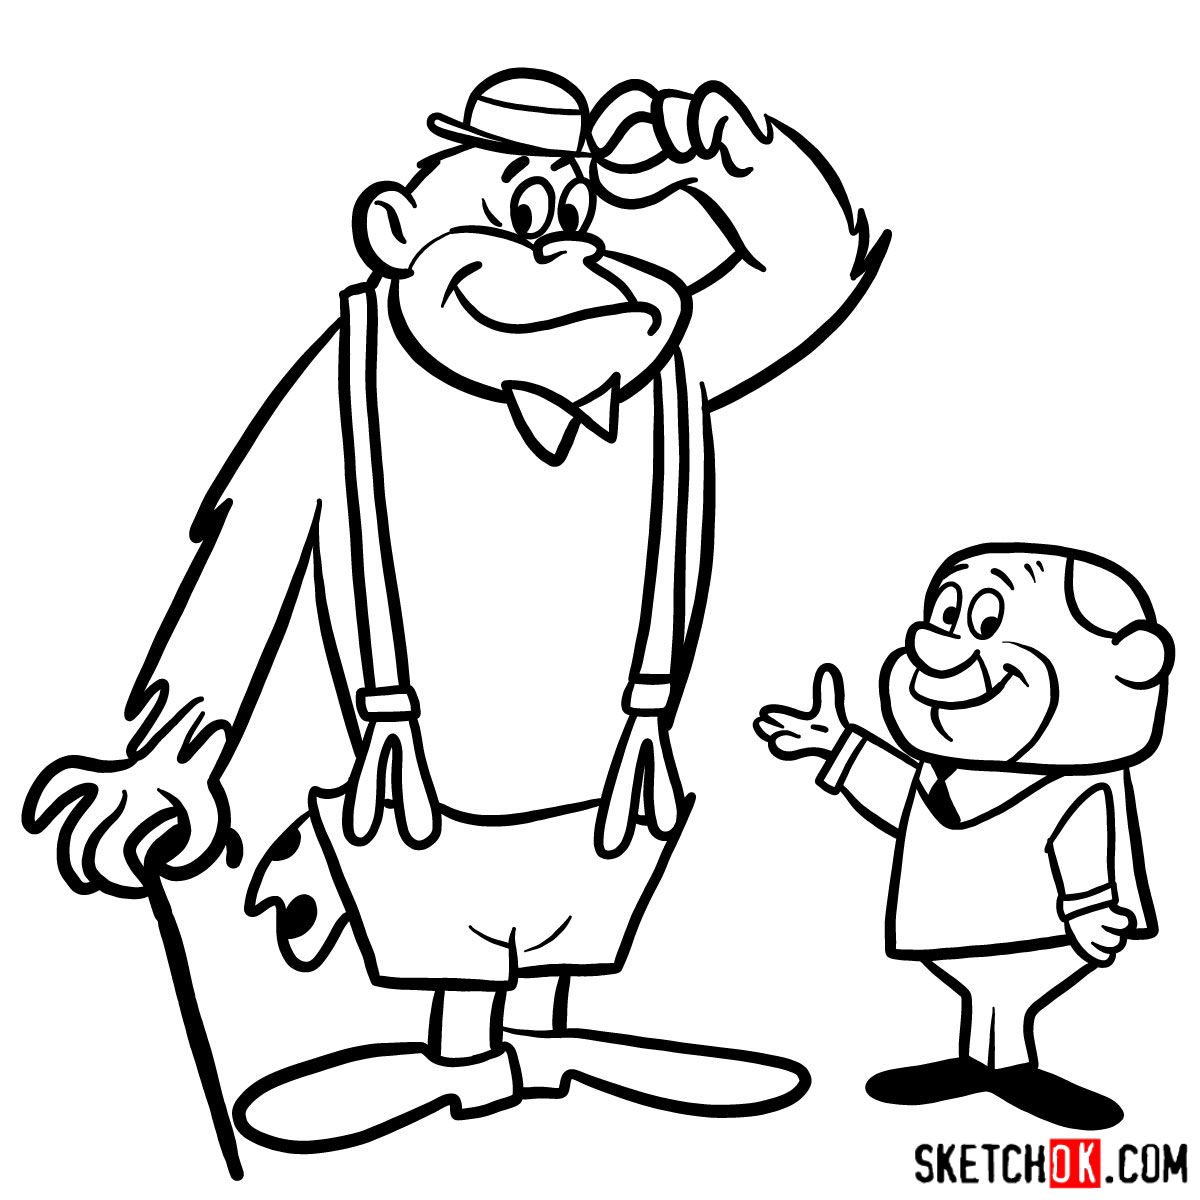 How to draw Magilla Gorilla and Mr. Peebles - step 17